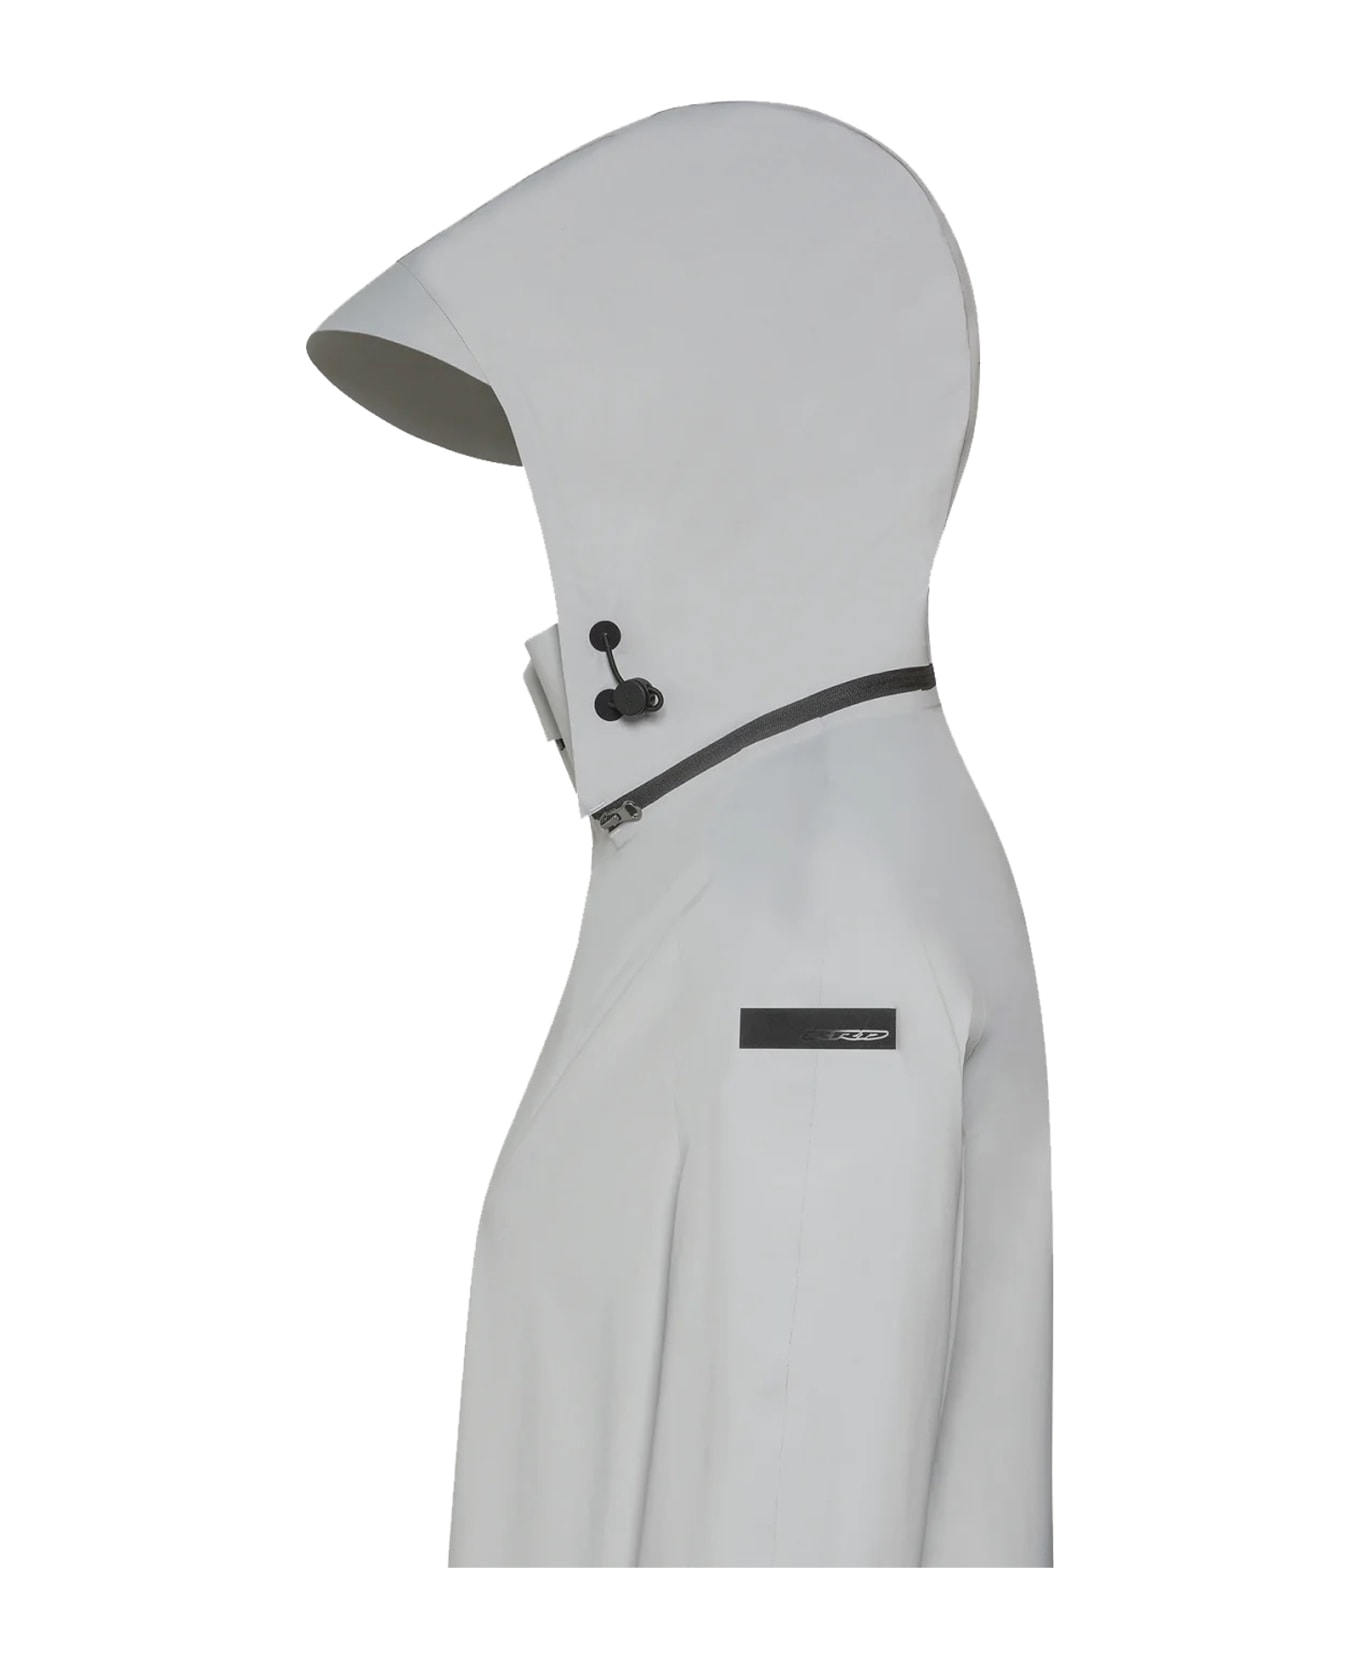 RRD - Roberto Ricci Design Jacket - Grey